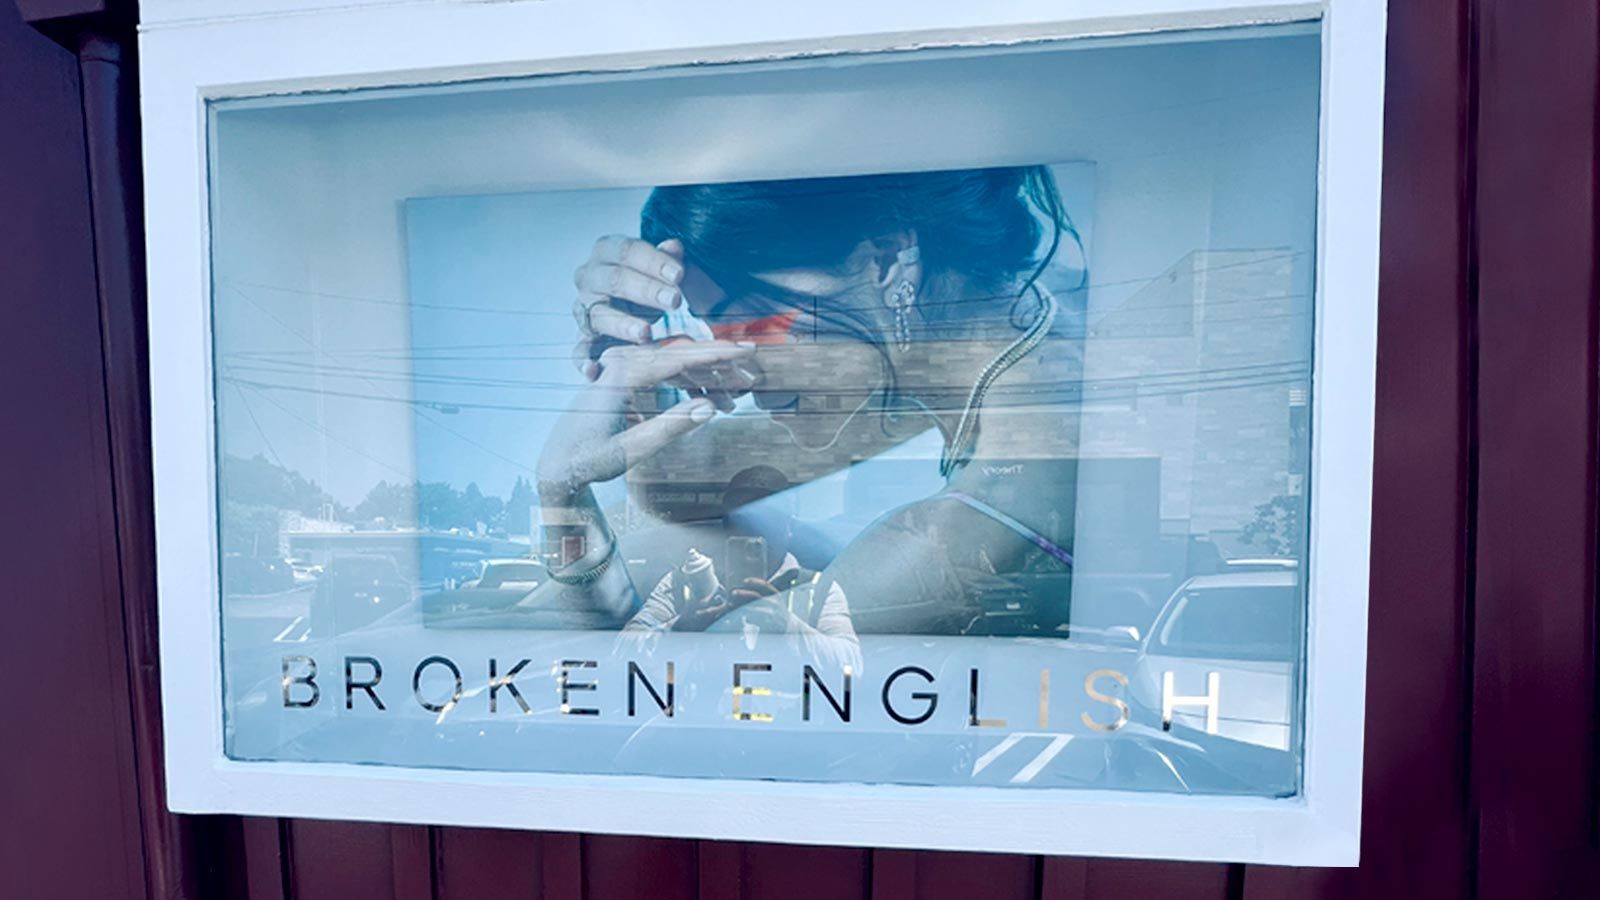 Broken English window vinyl lettering